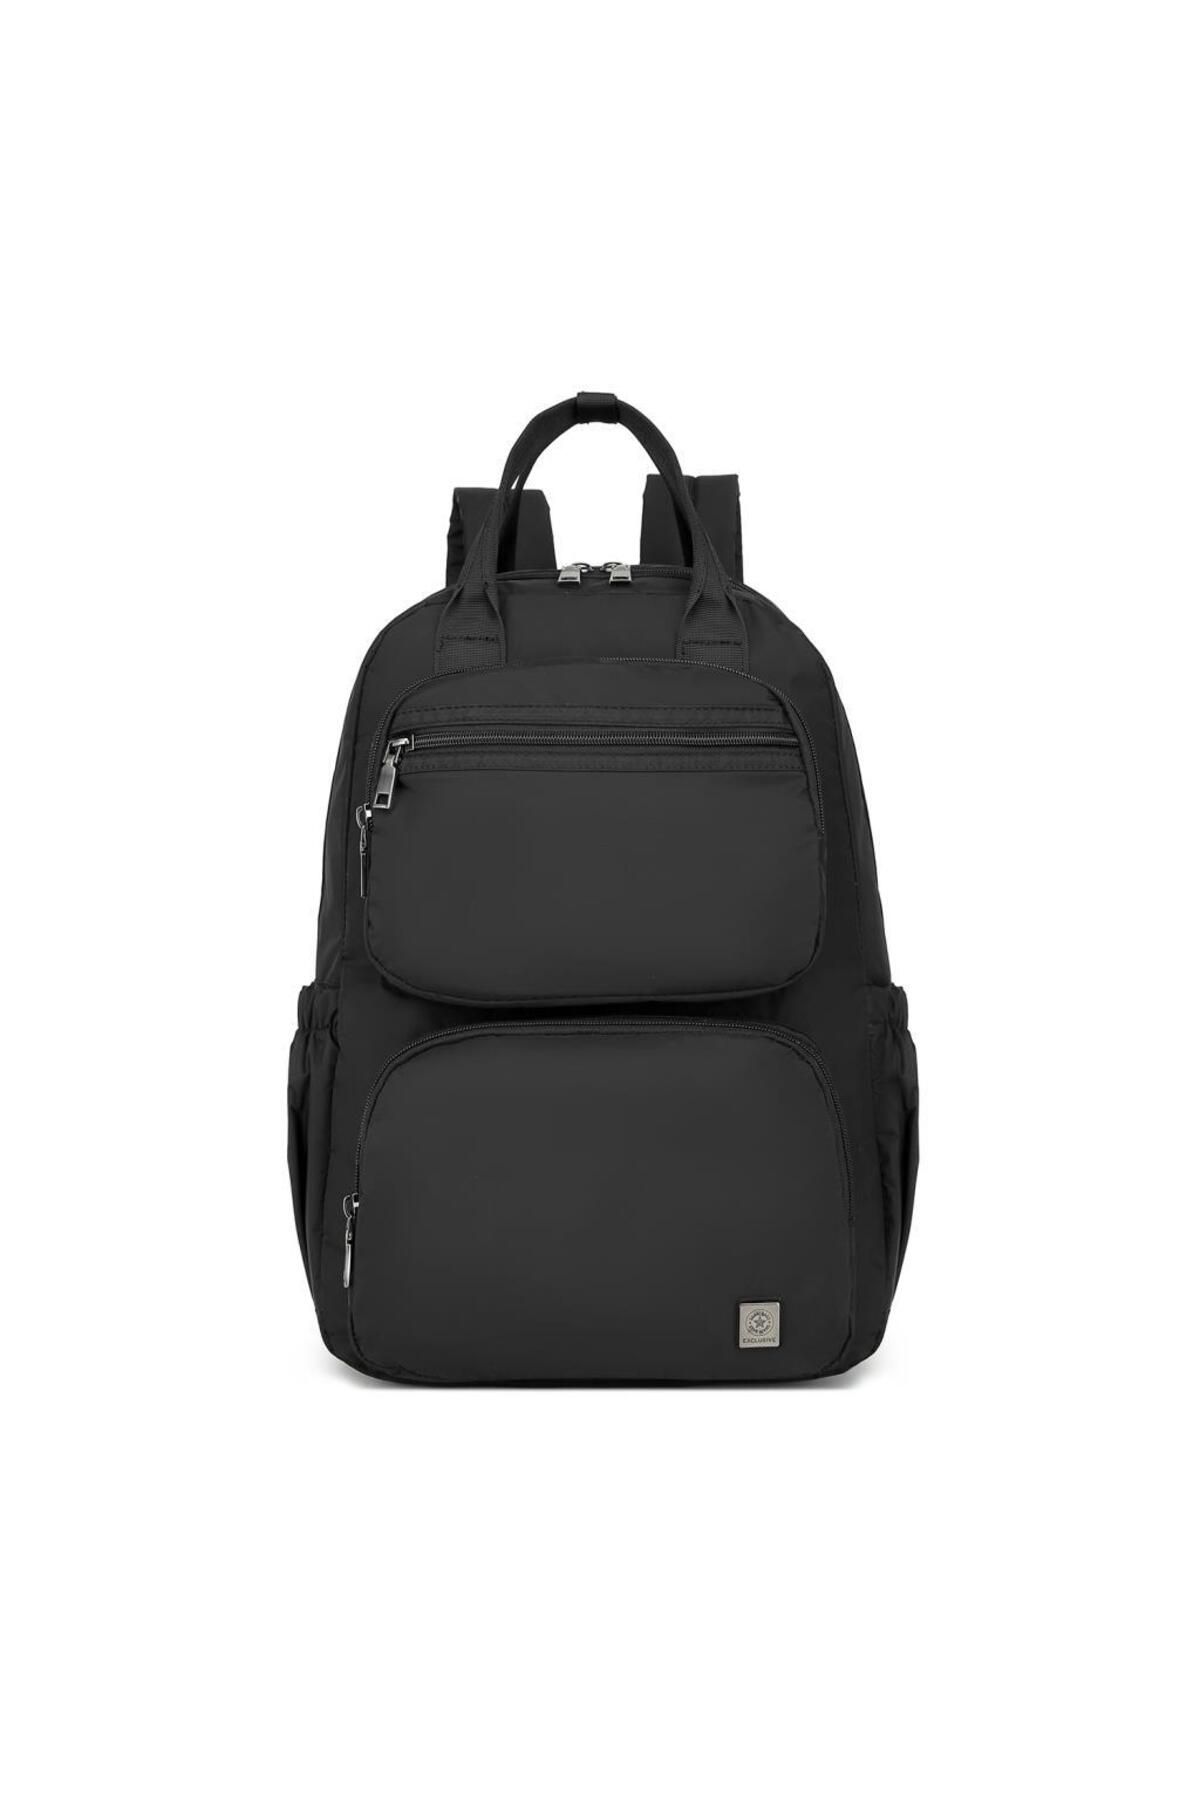 Smart Bags Exclusive Serisi Uniseks Sırt Çantası Smart Bags 8710